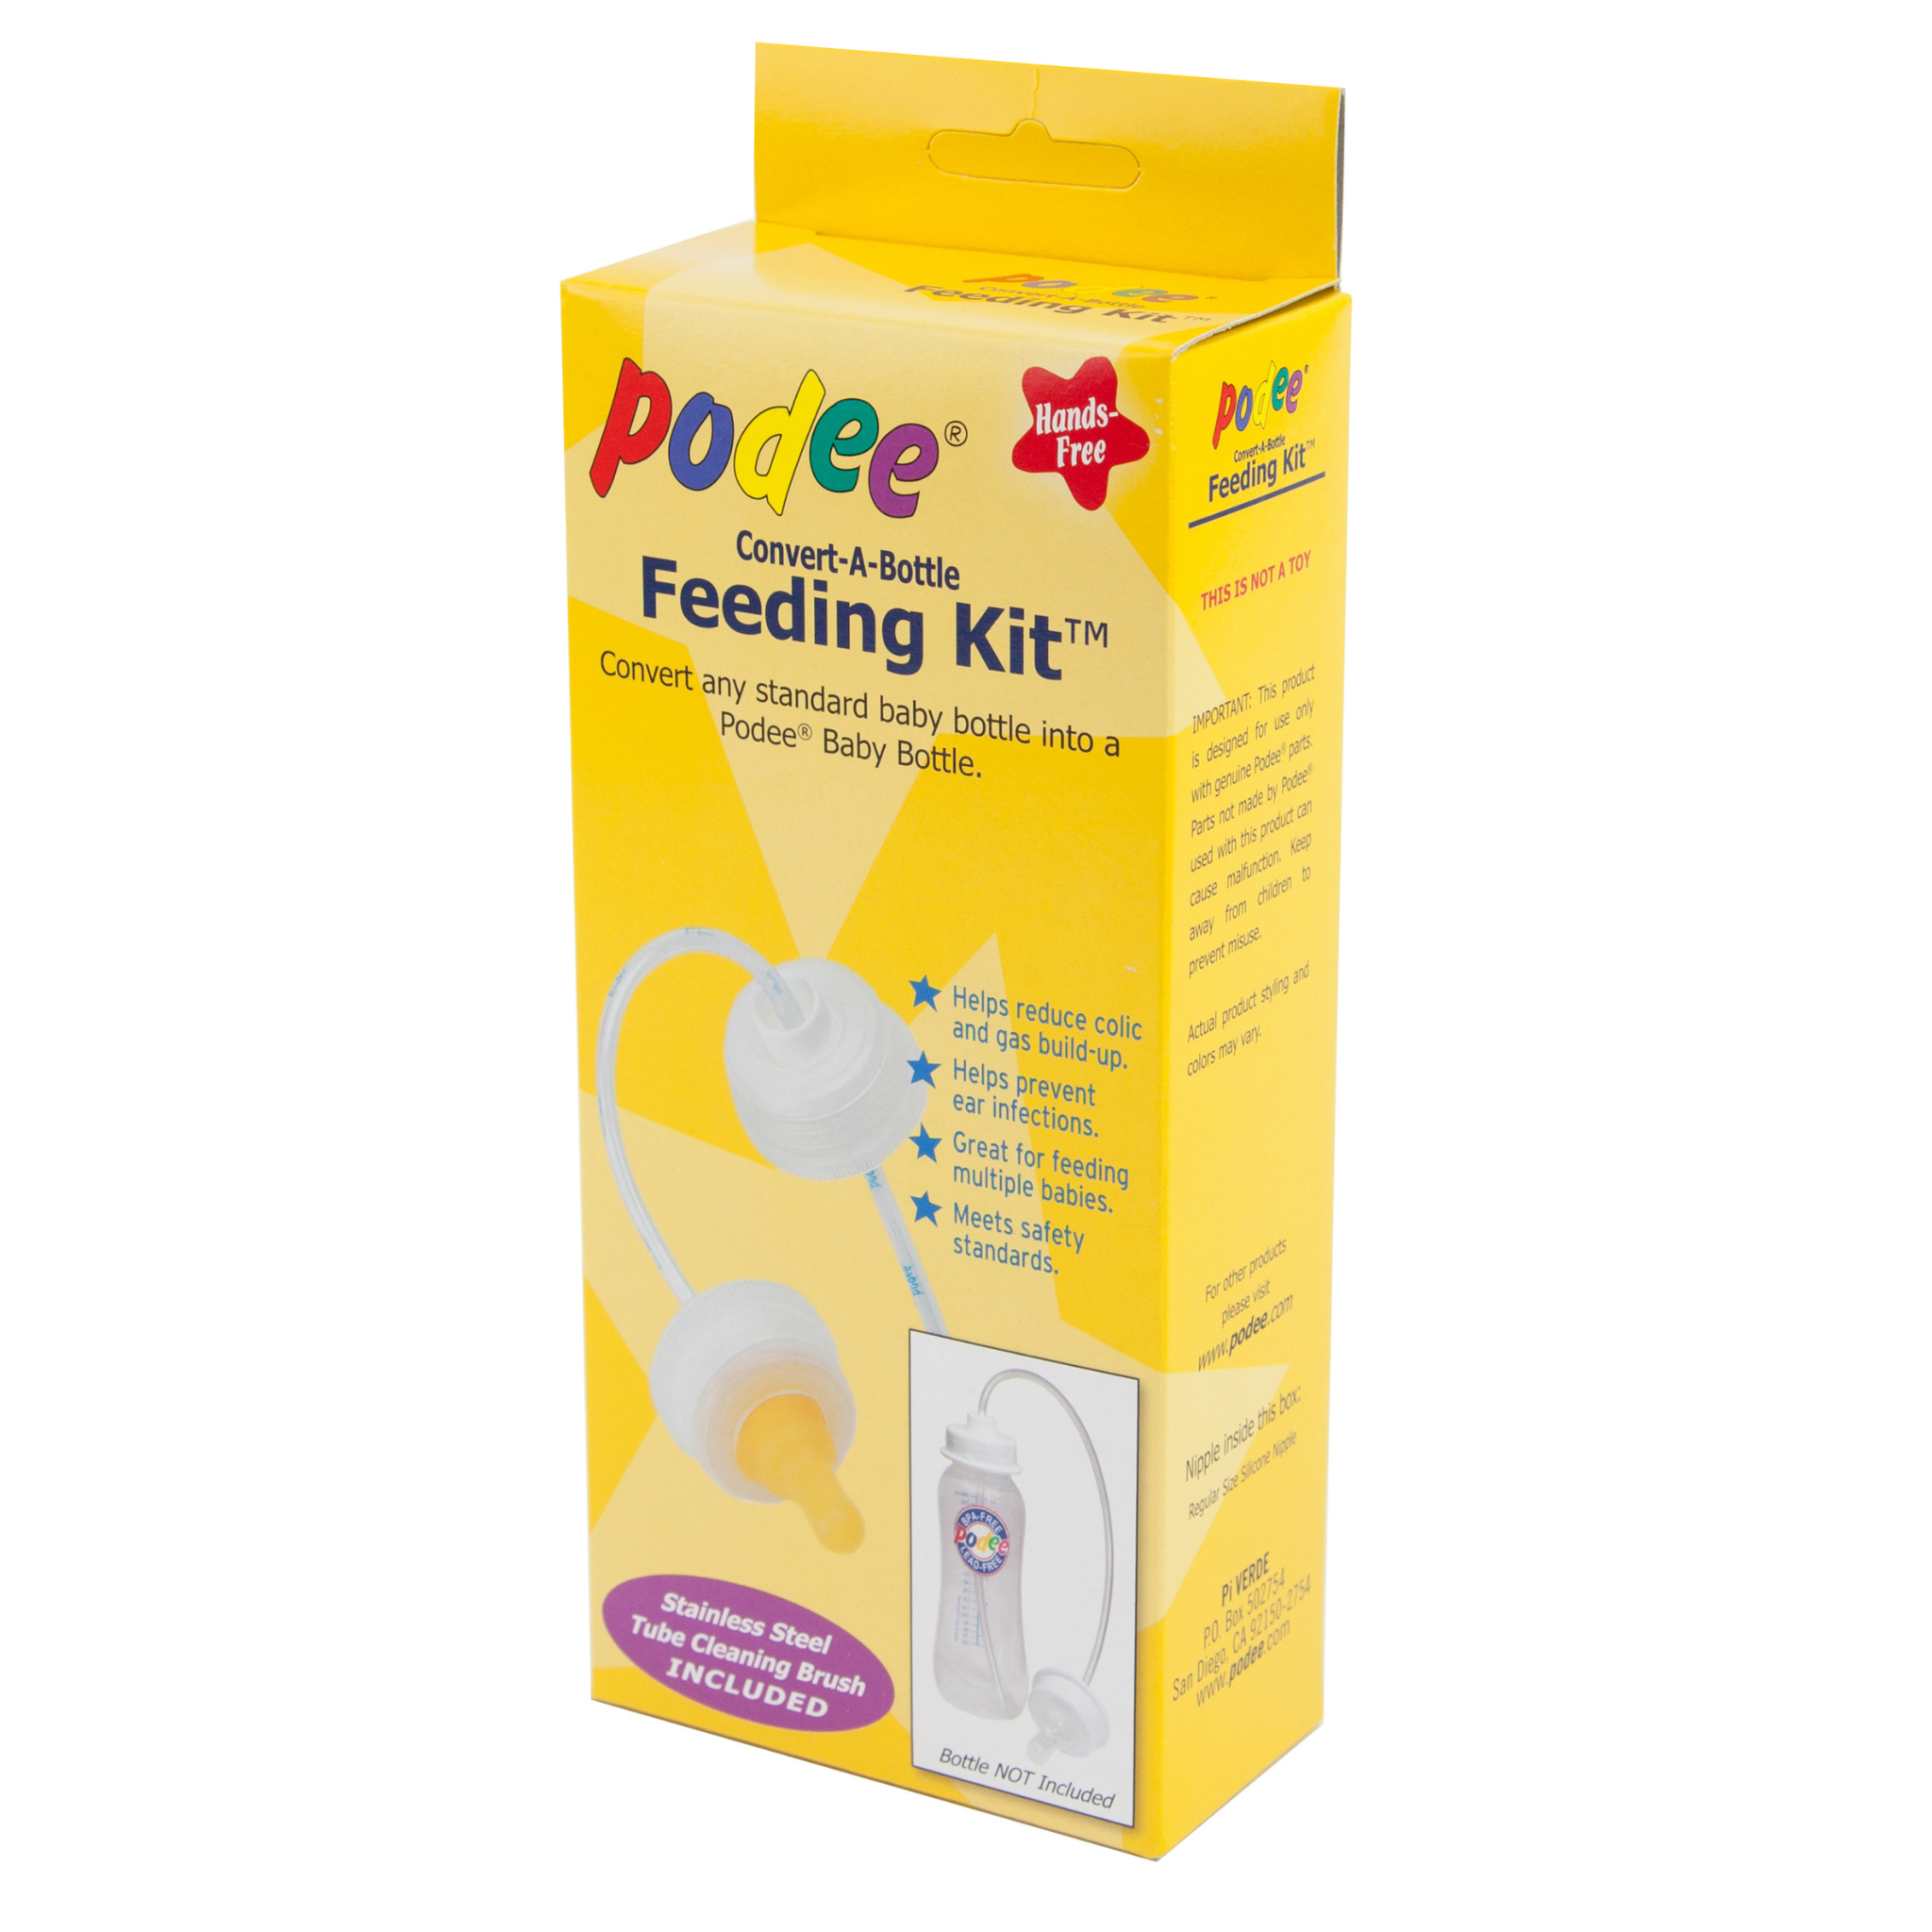 Podee® Convert-A-Bottle Feeding Kit